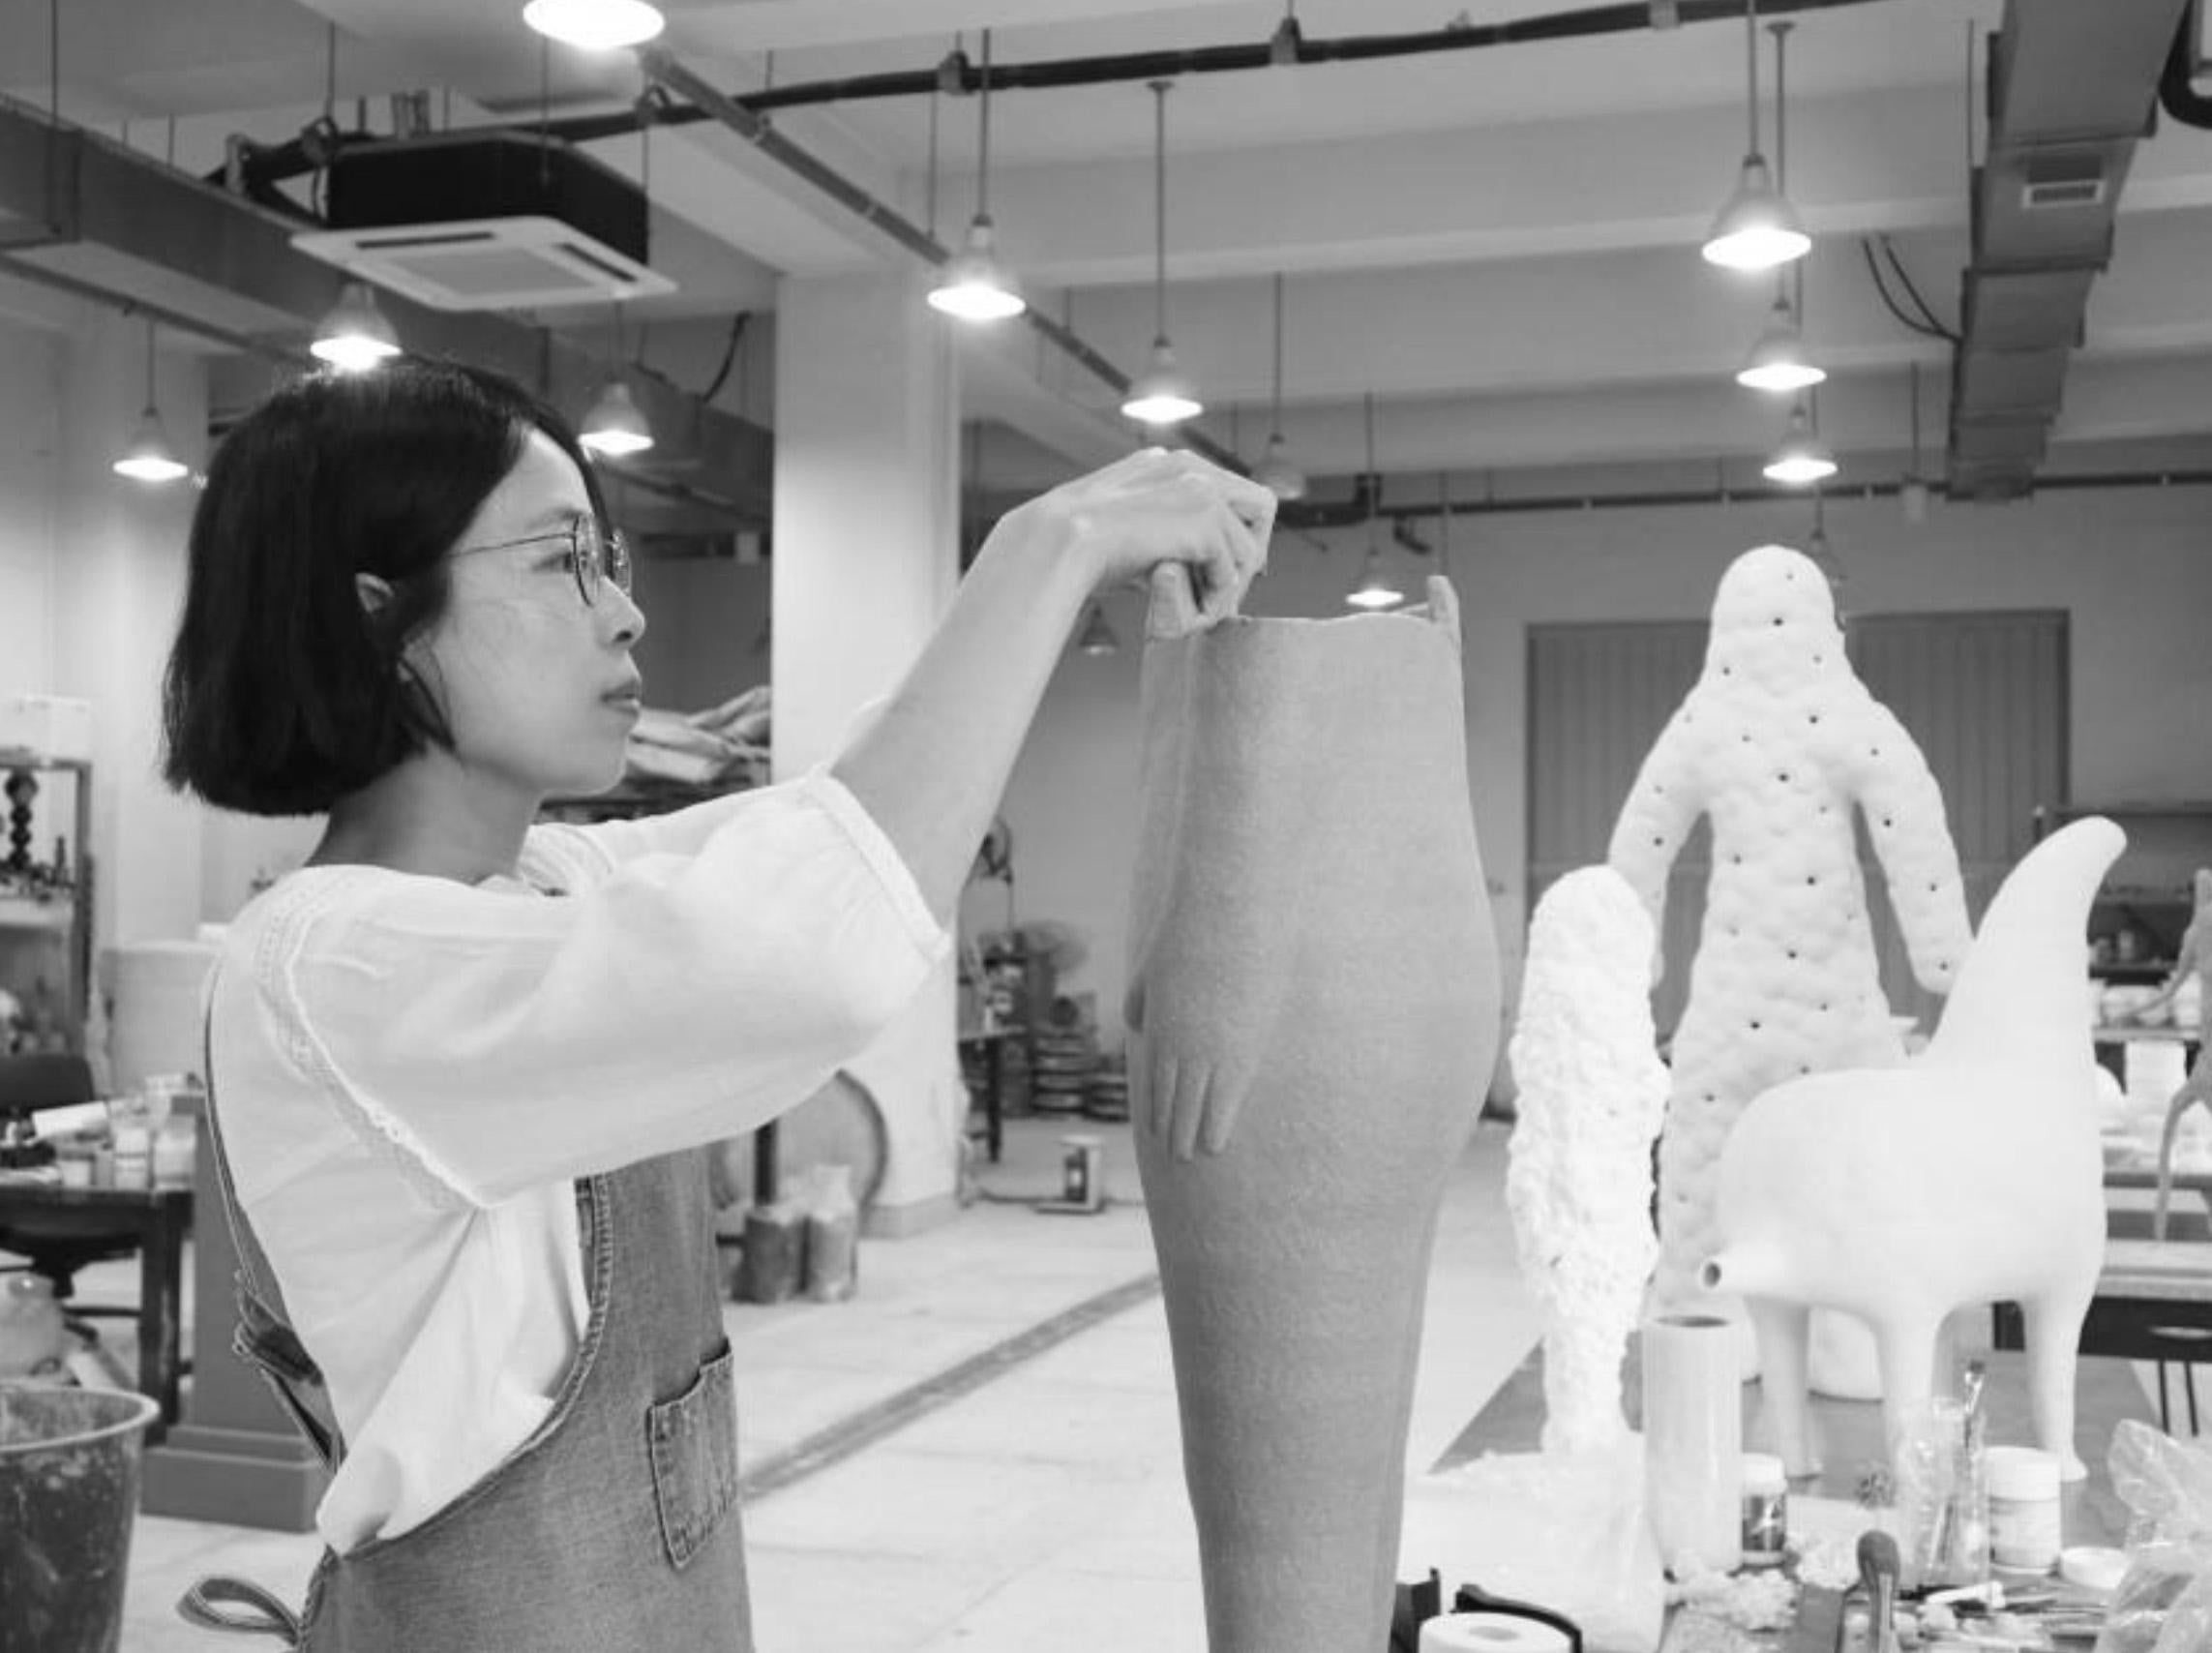 Asiatique Contemporary Energy 0.2 sculpture en argile de Jung Jisook en vente